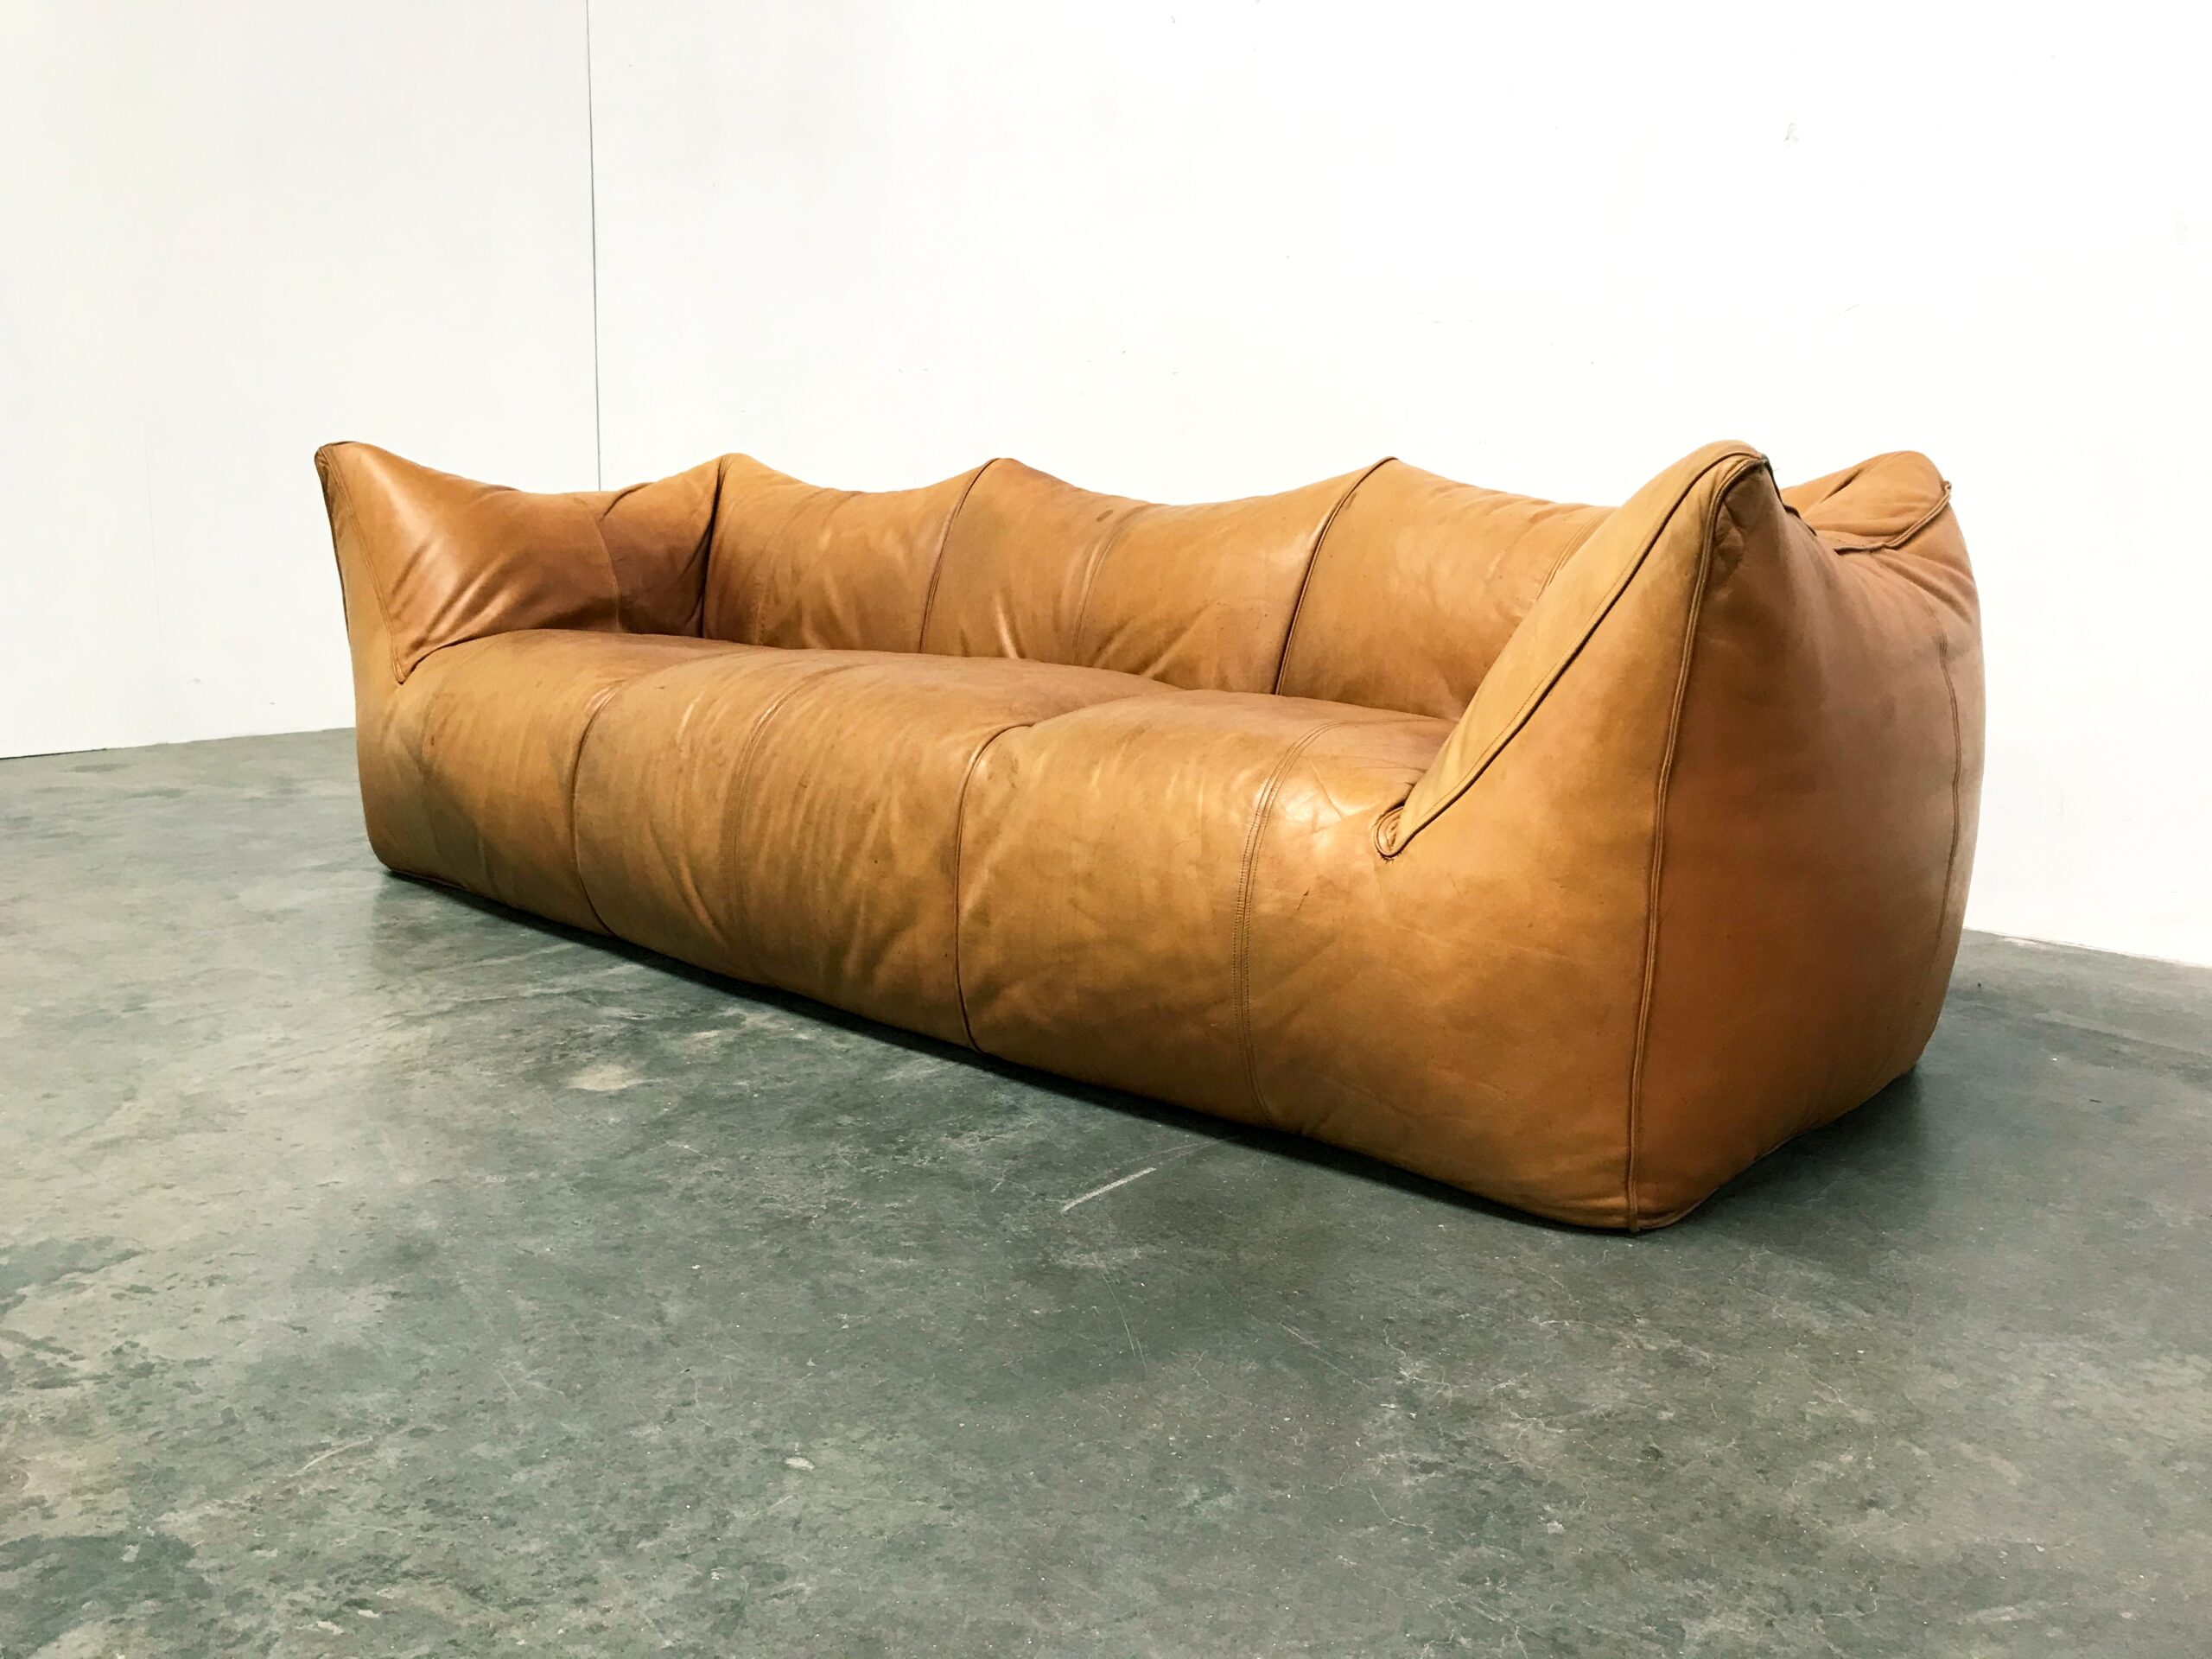 Le Bambole sofa by Mario Bellini for B&B Italia, 1970s – SitonVintage